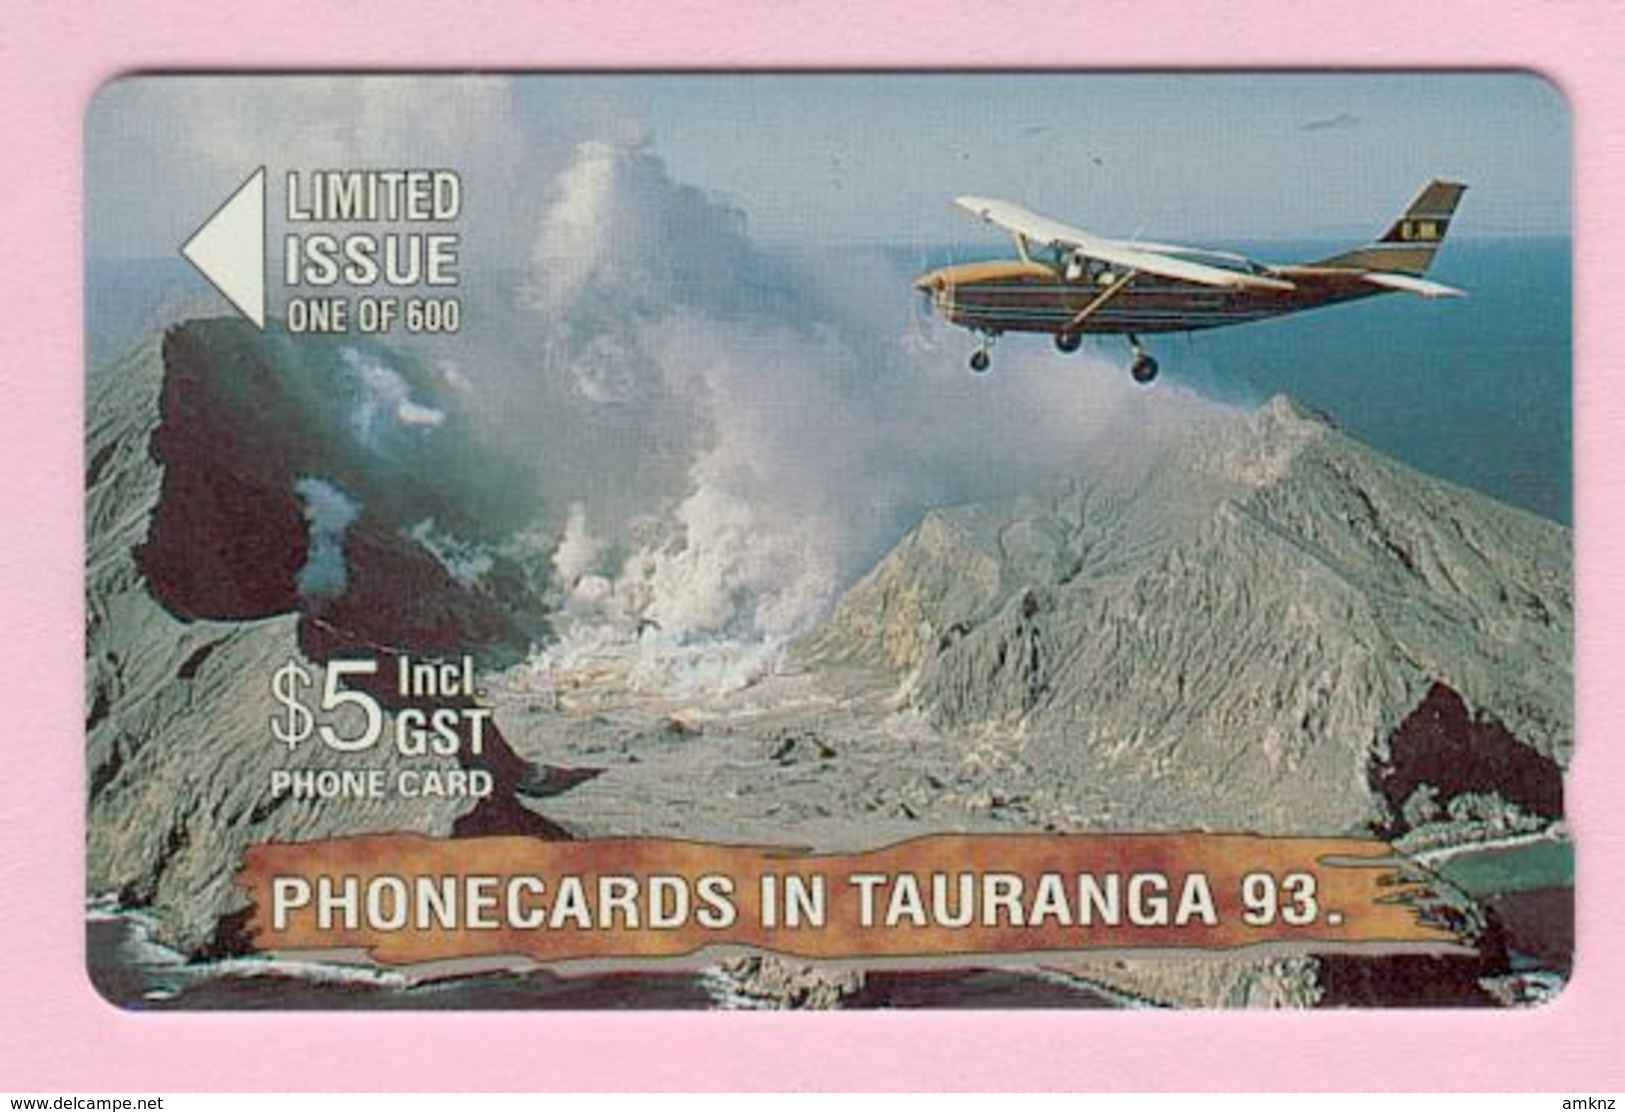 New Zealand - Private Overprint - 1993 Phonecards In Tauranga $5 White Island - Mint - NZ-CO-17 - Neuseeland